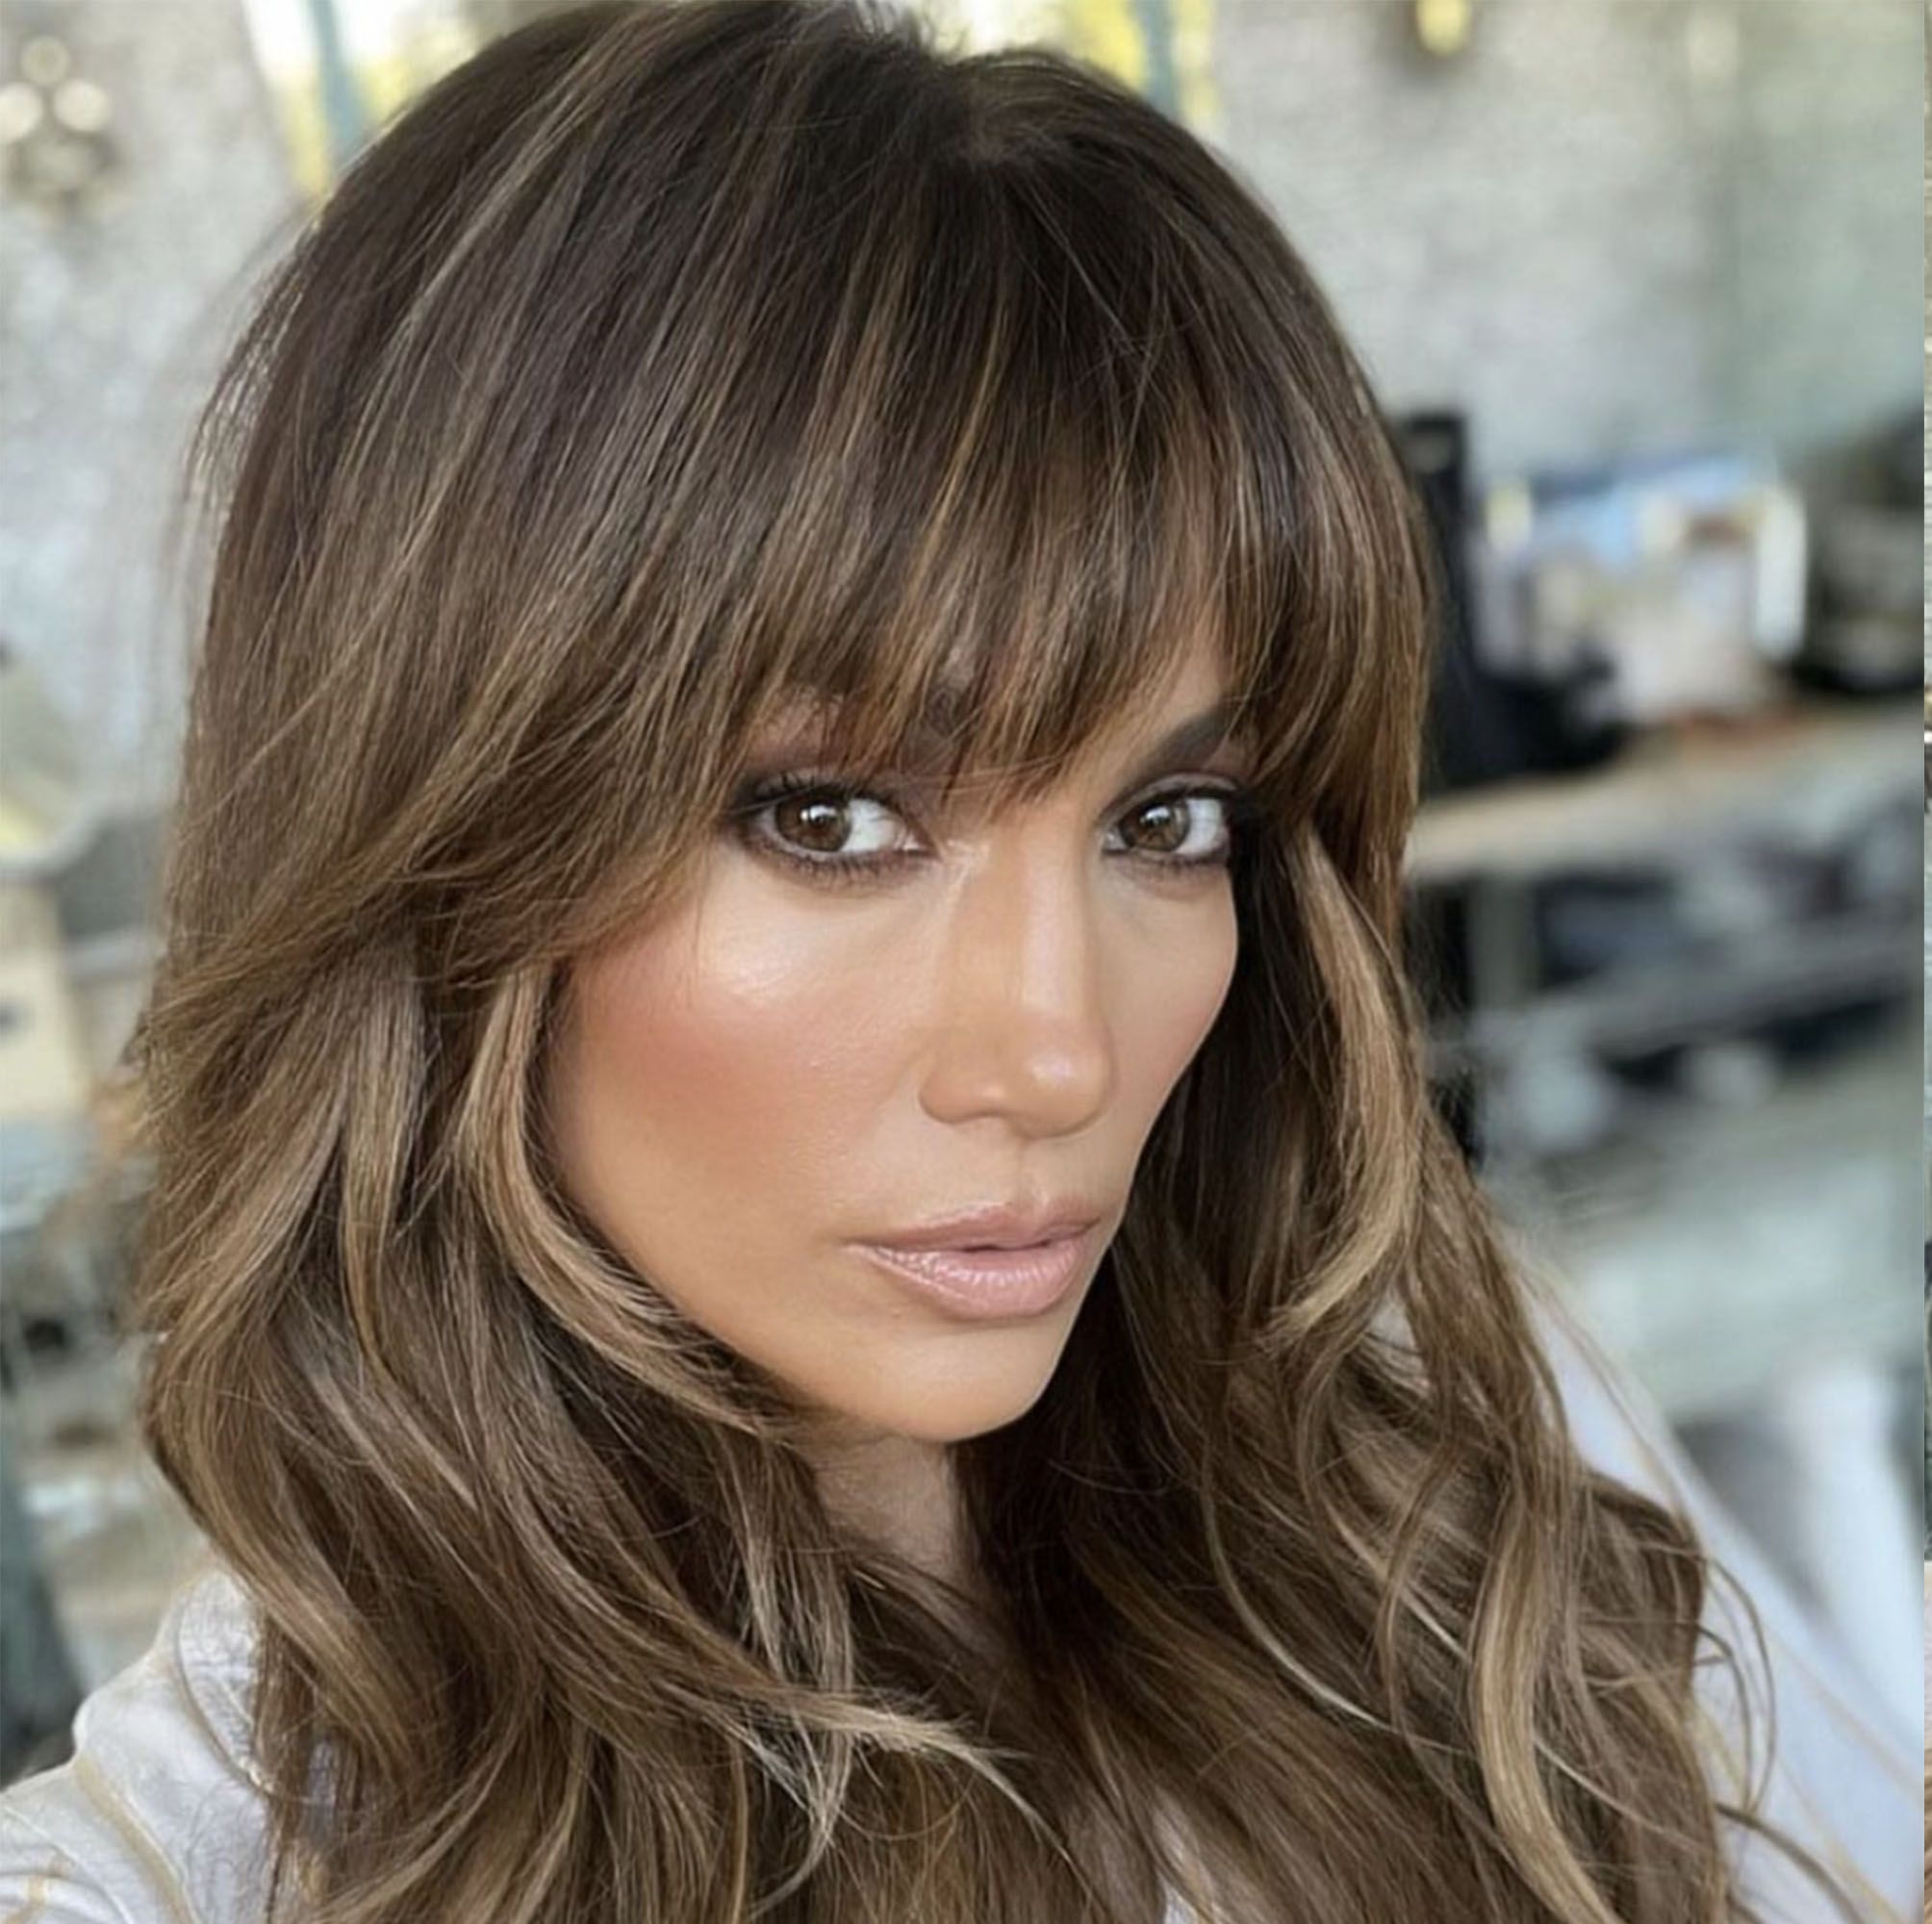 Jennifer Lopez Debuts New Bangs in Summer Hair Transformation